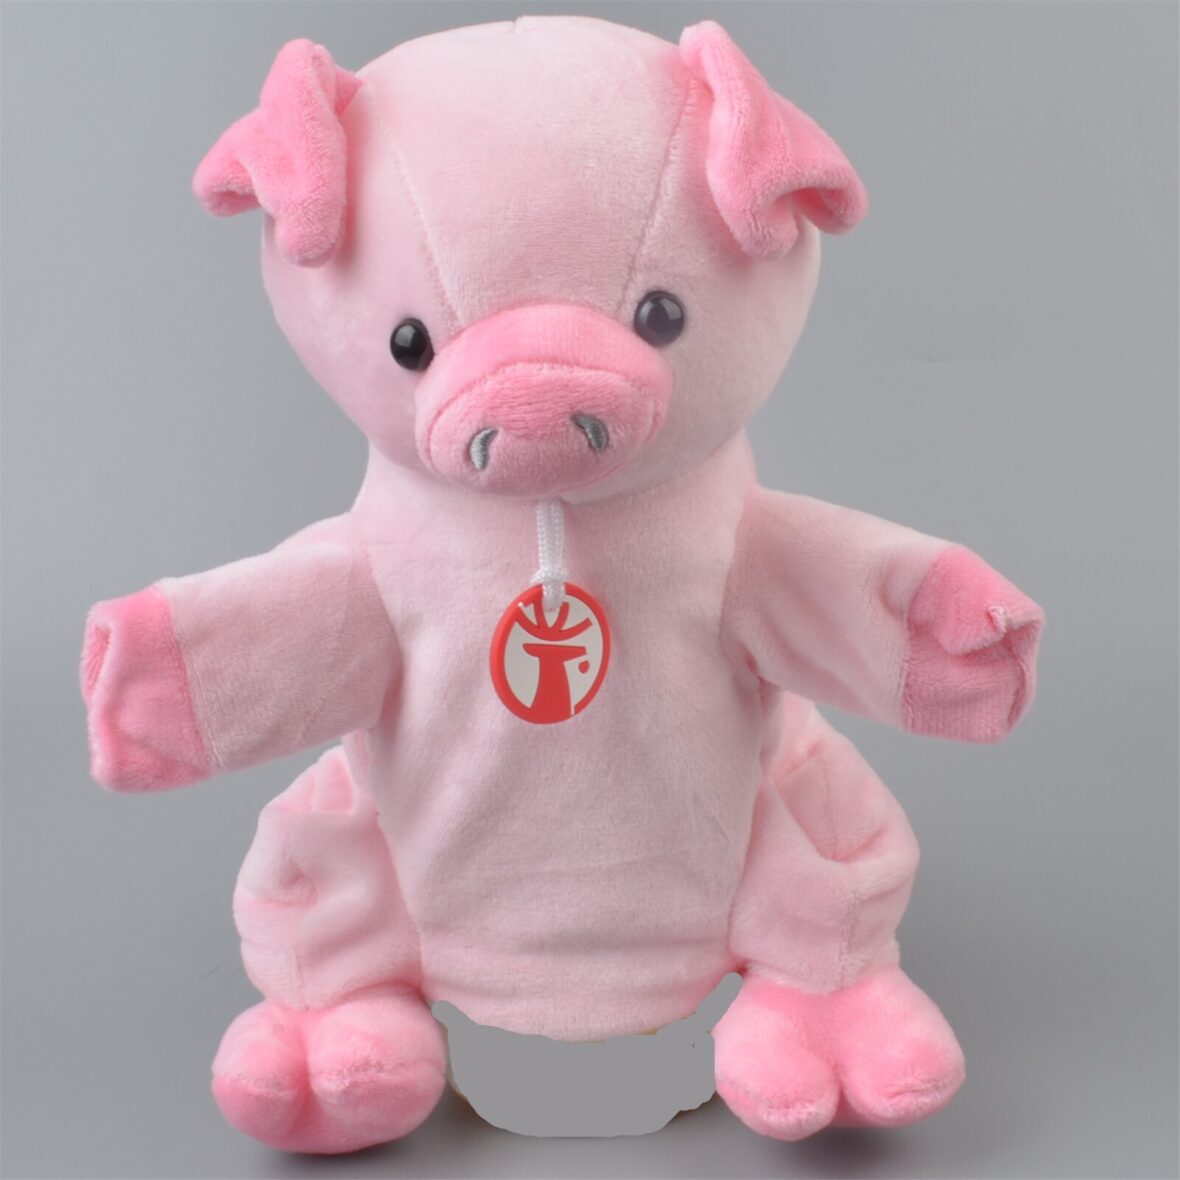 23cm Pig Hand Puppet Soft Plush Toy